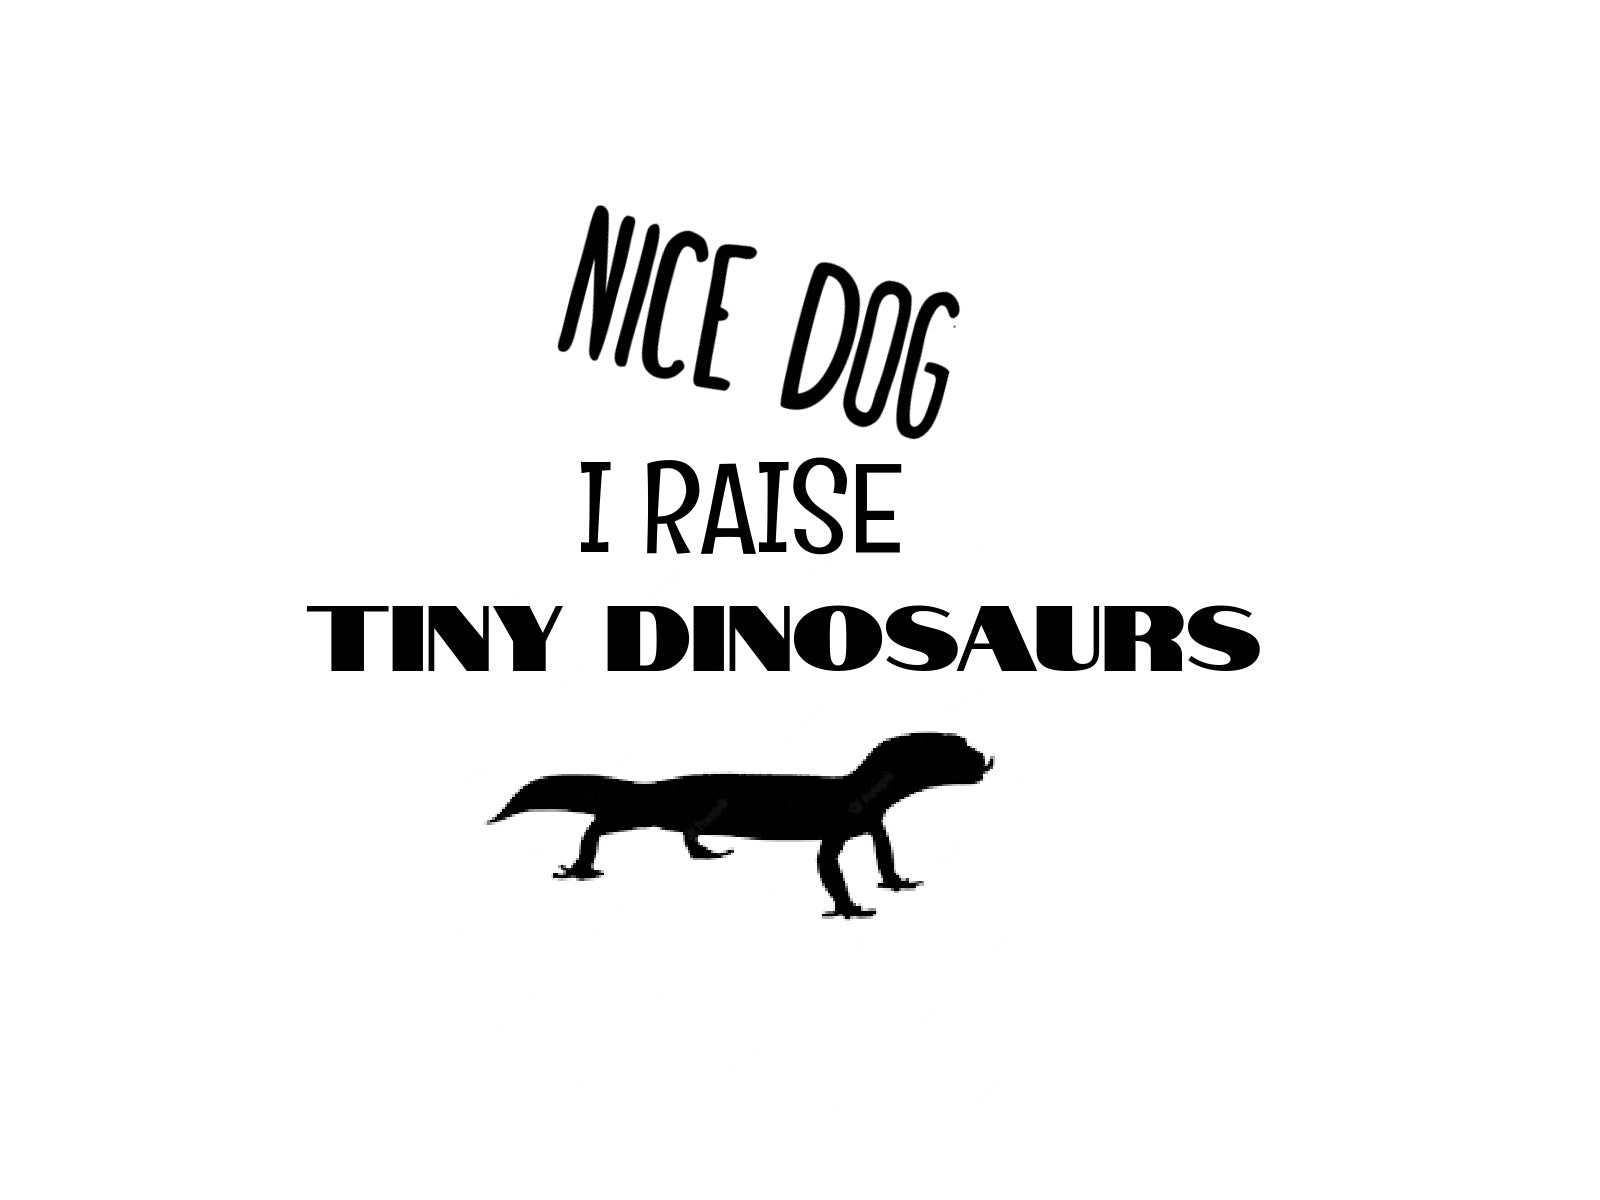 Nice Dog. I Raise Tiny Dinosaurs.